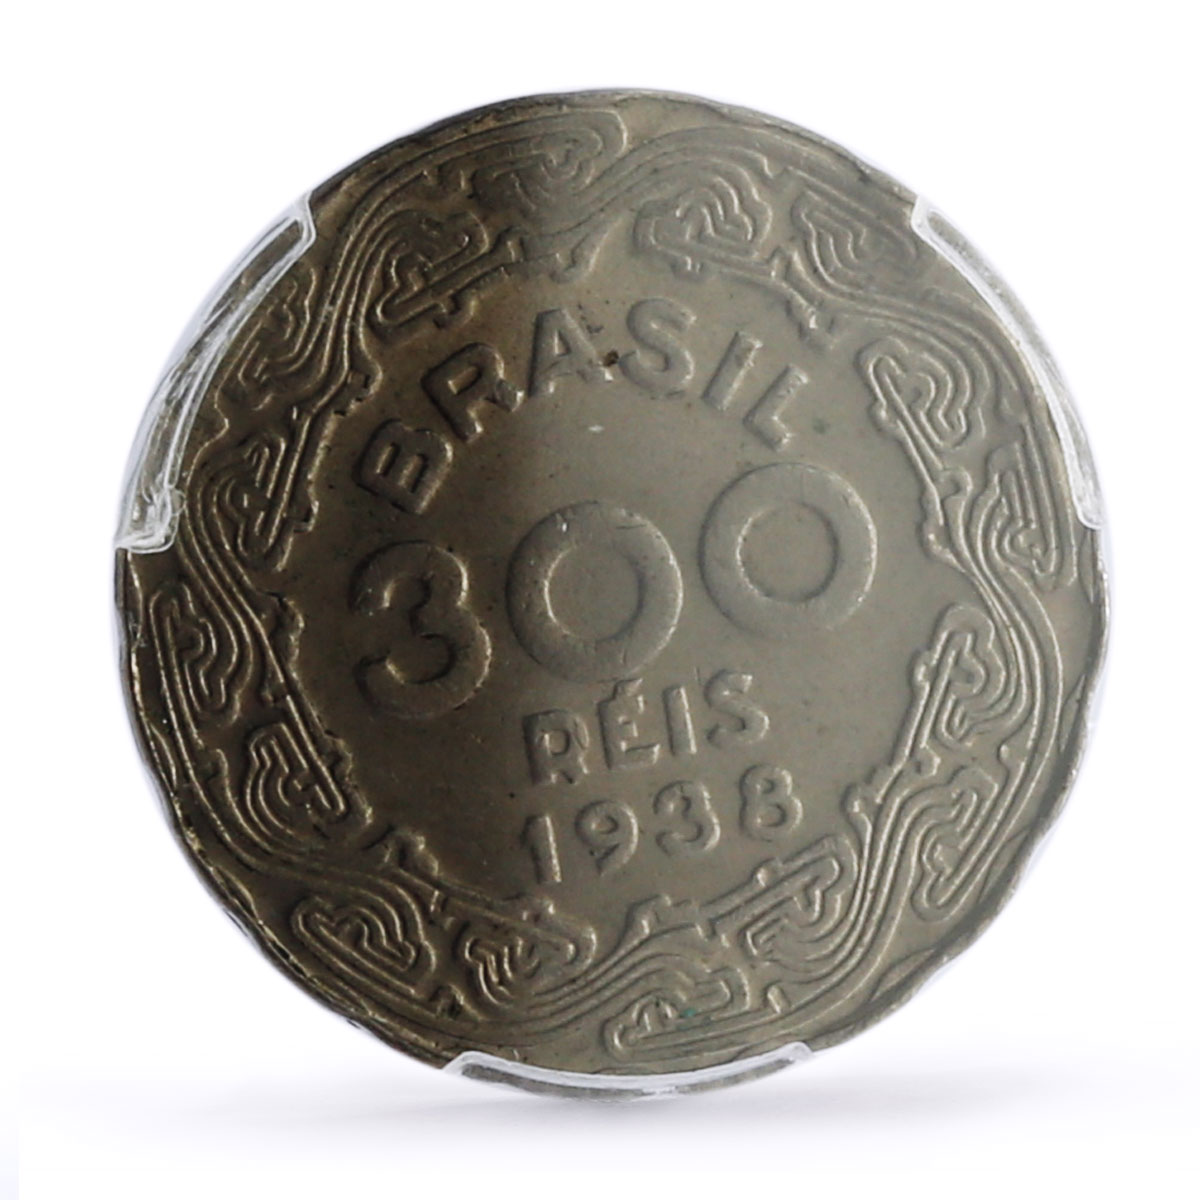 Brazil 300 reis President Getulio Vargas Politics MS63 PCGS CuNi coin 1938